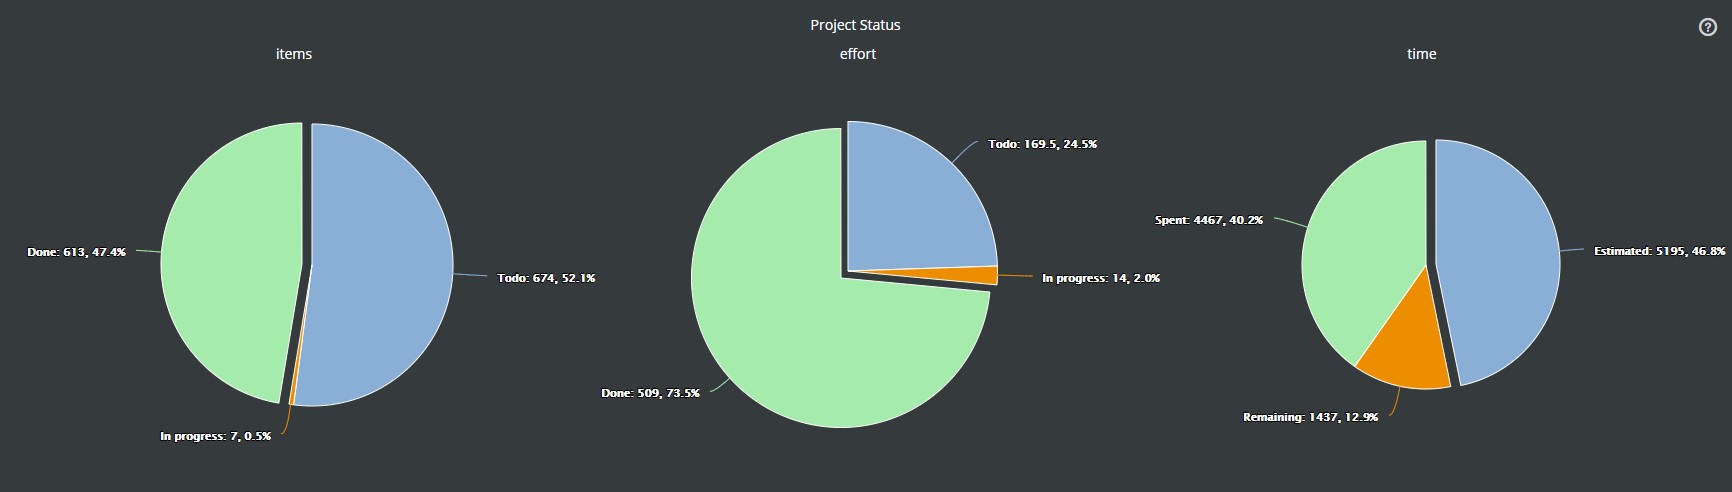 scrumdesk project status charts